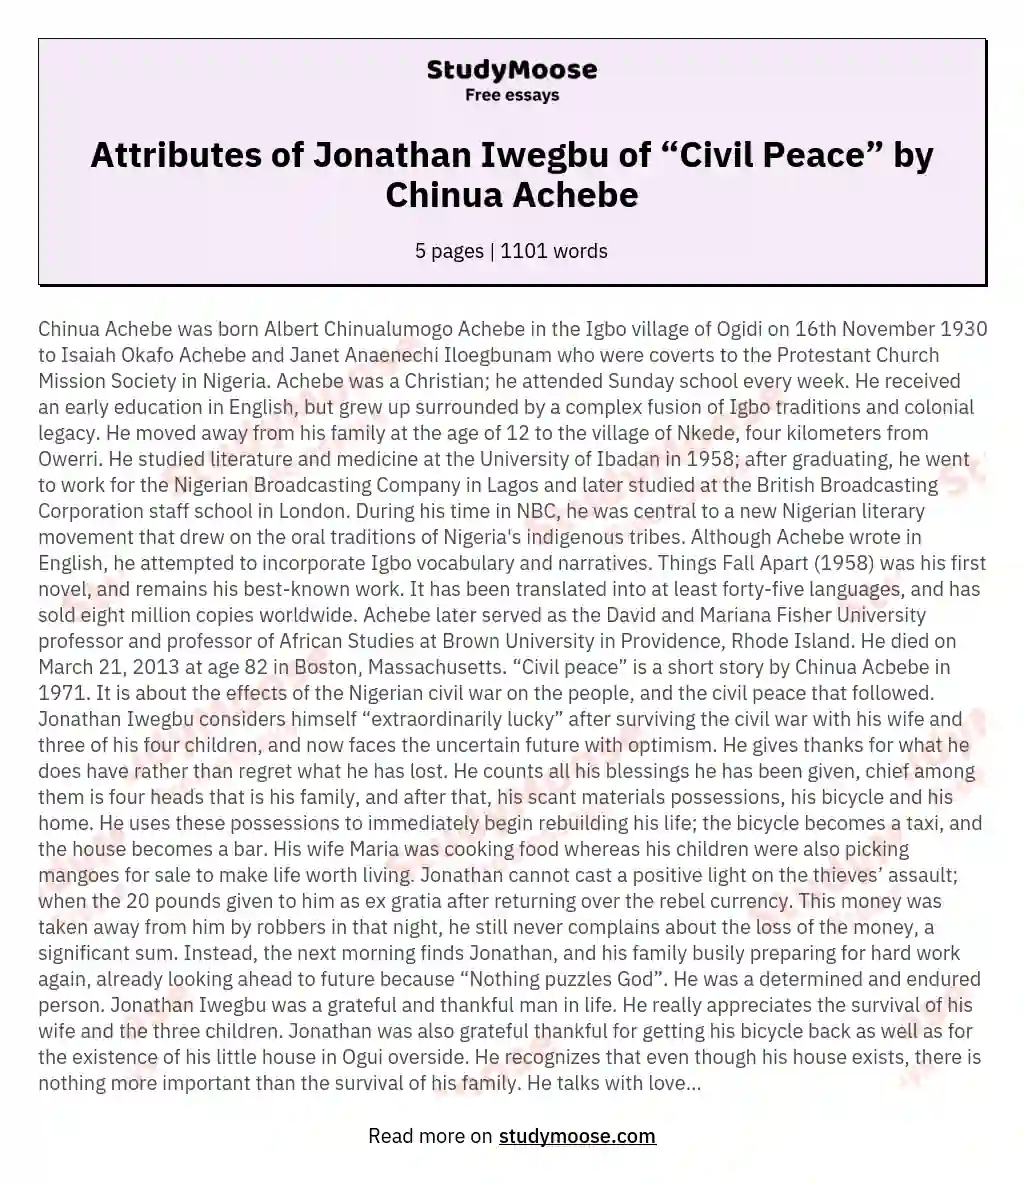 Attributes of Jonathan Iwegbu of “Civil Peace” by Chinua Achebe